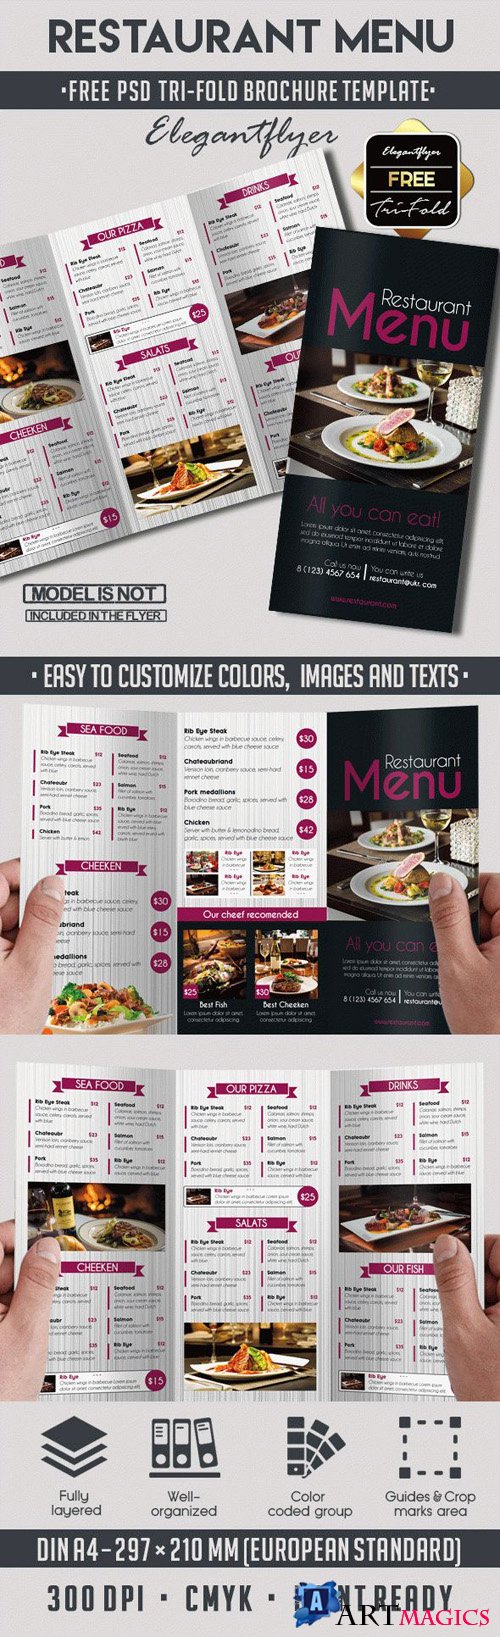 Restaurant Menu - PSD Tri-Fold Brochure Template